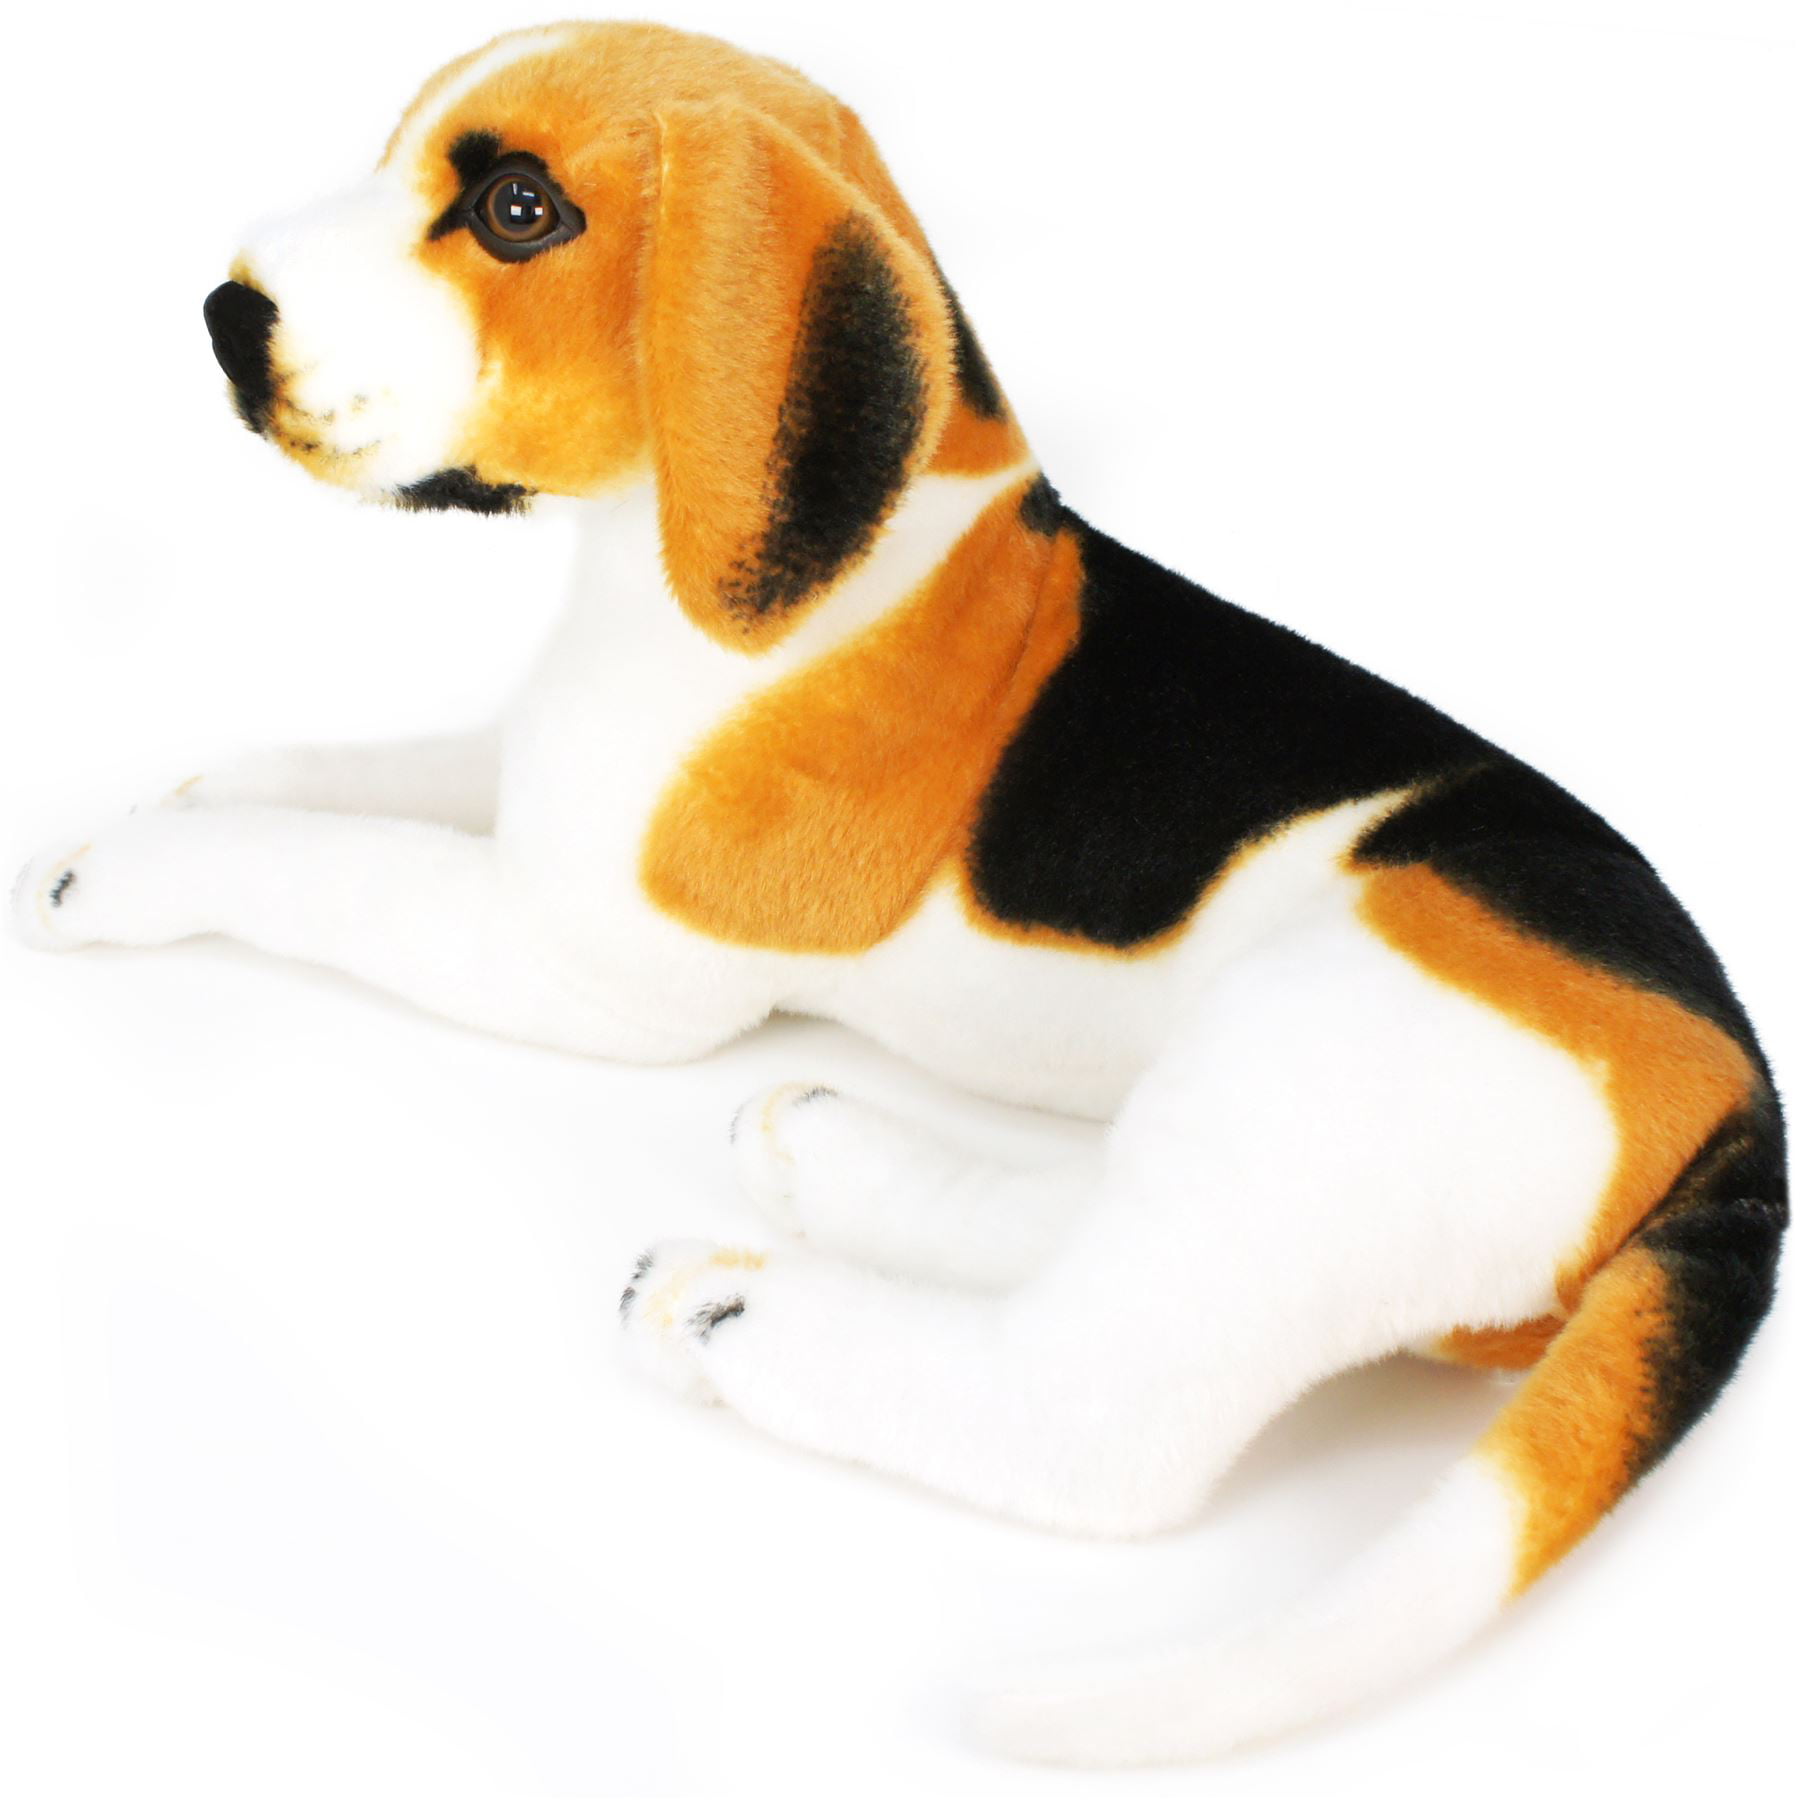 large beagle stuffed animal